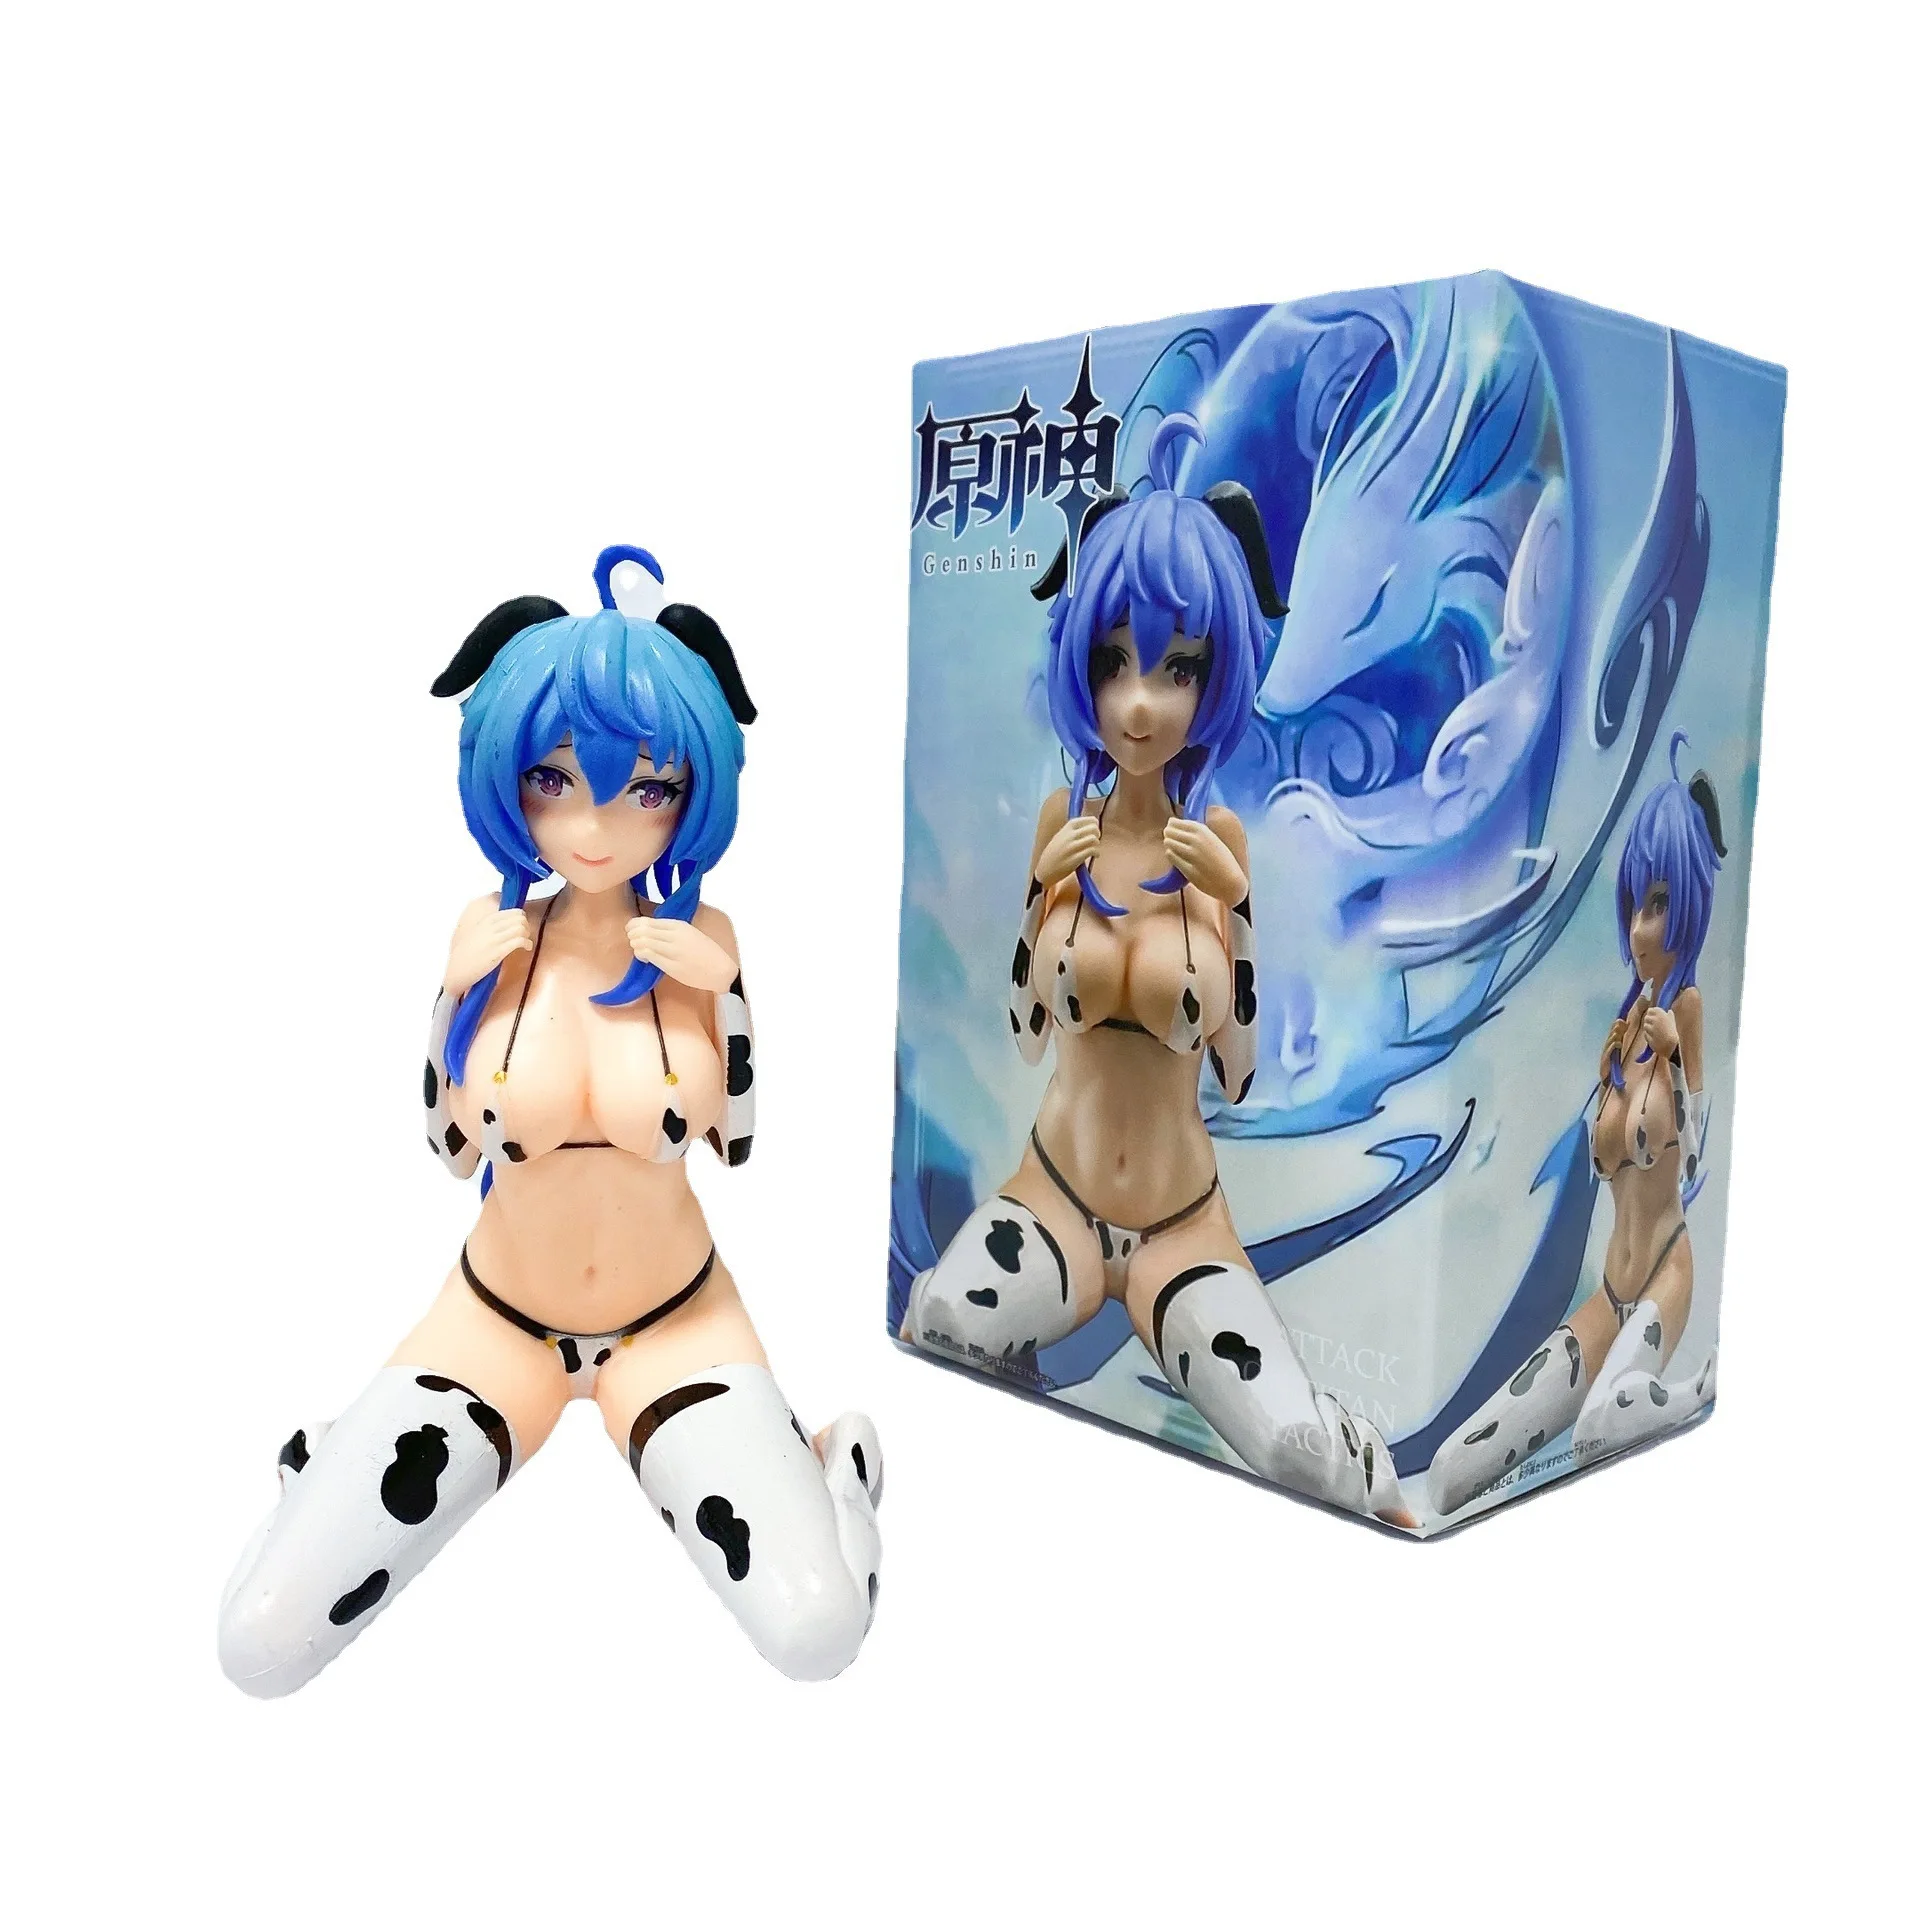 

Boxed 2022 New Genshin Impact Gan Yu Sexy Sitting Ver. PVC Action Figure Anime Paimon GanYu Collectible Model Gift Toy 14cm